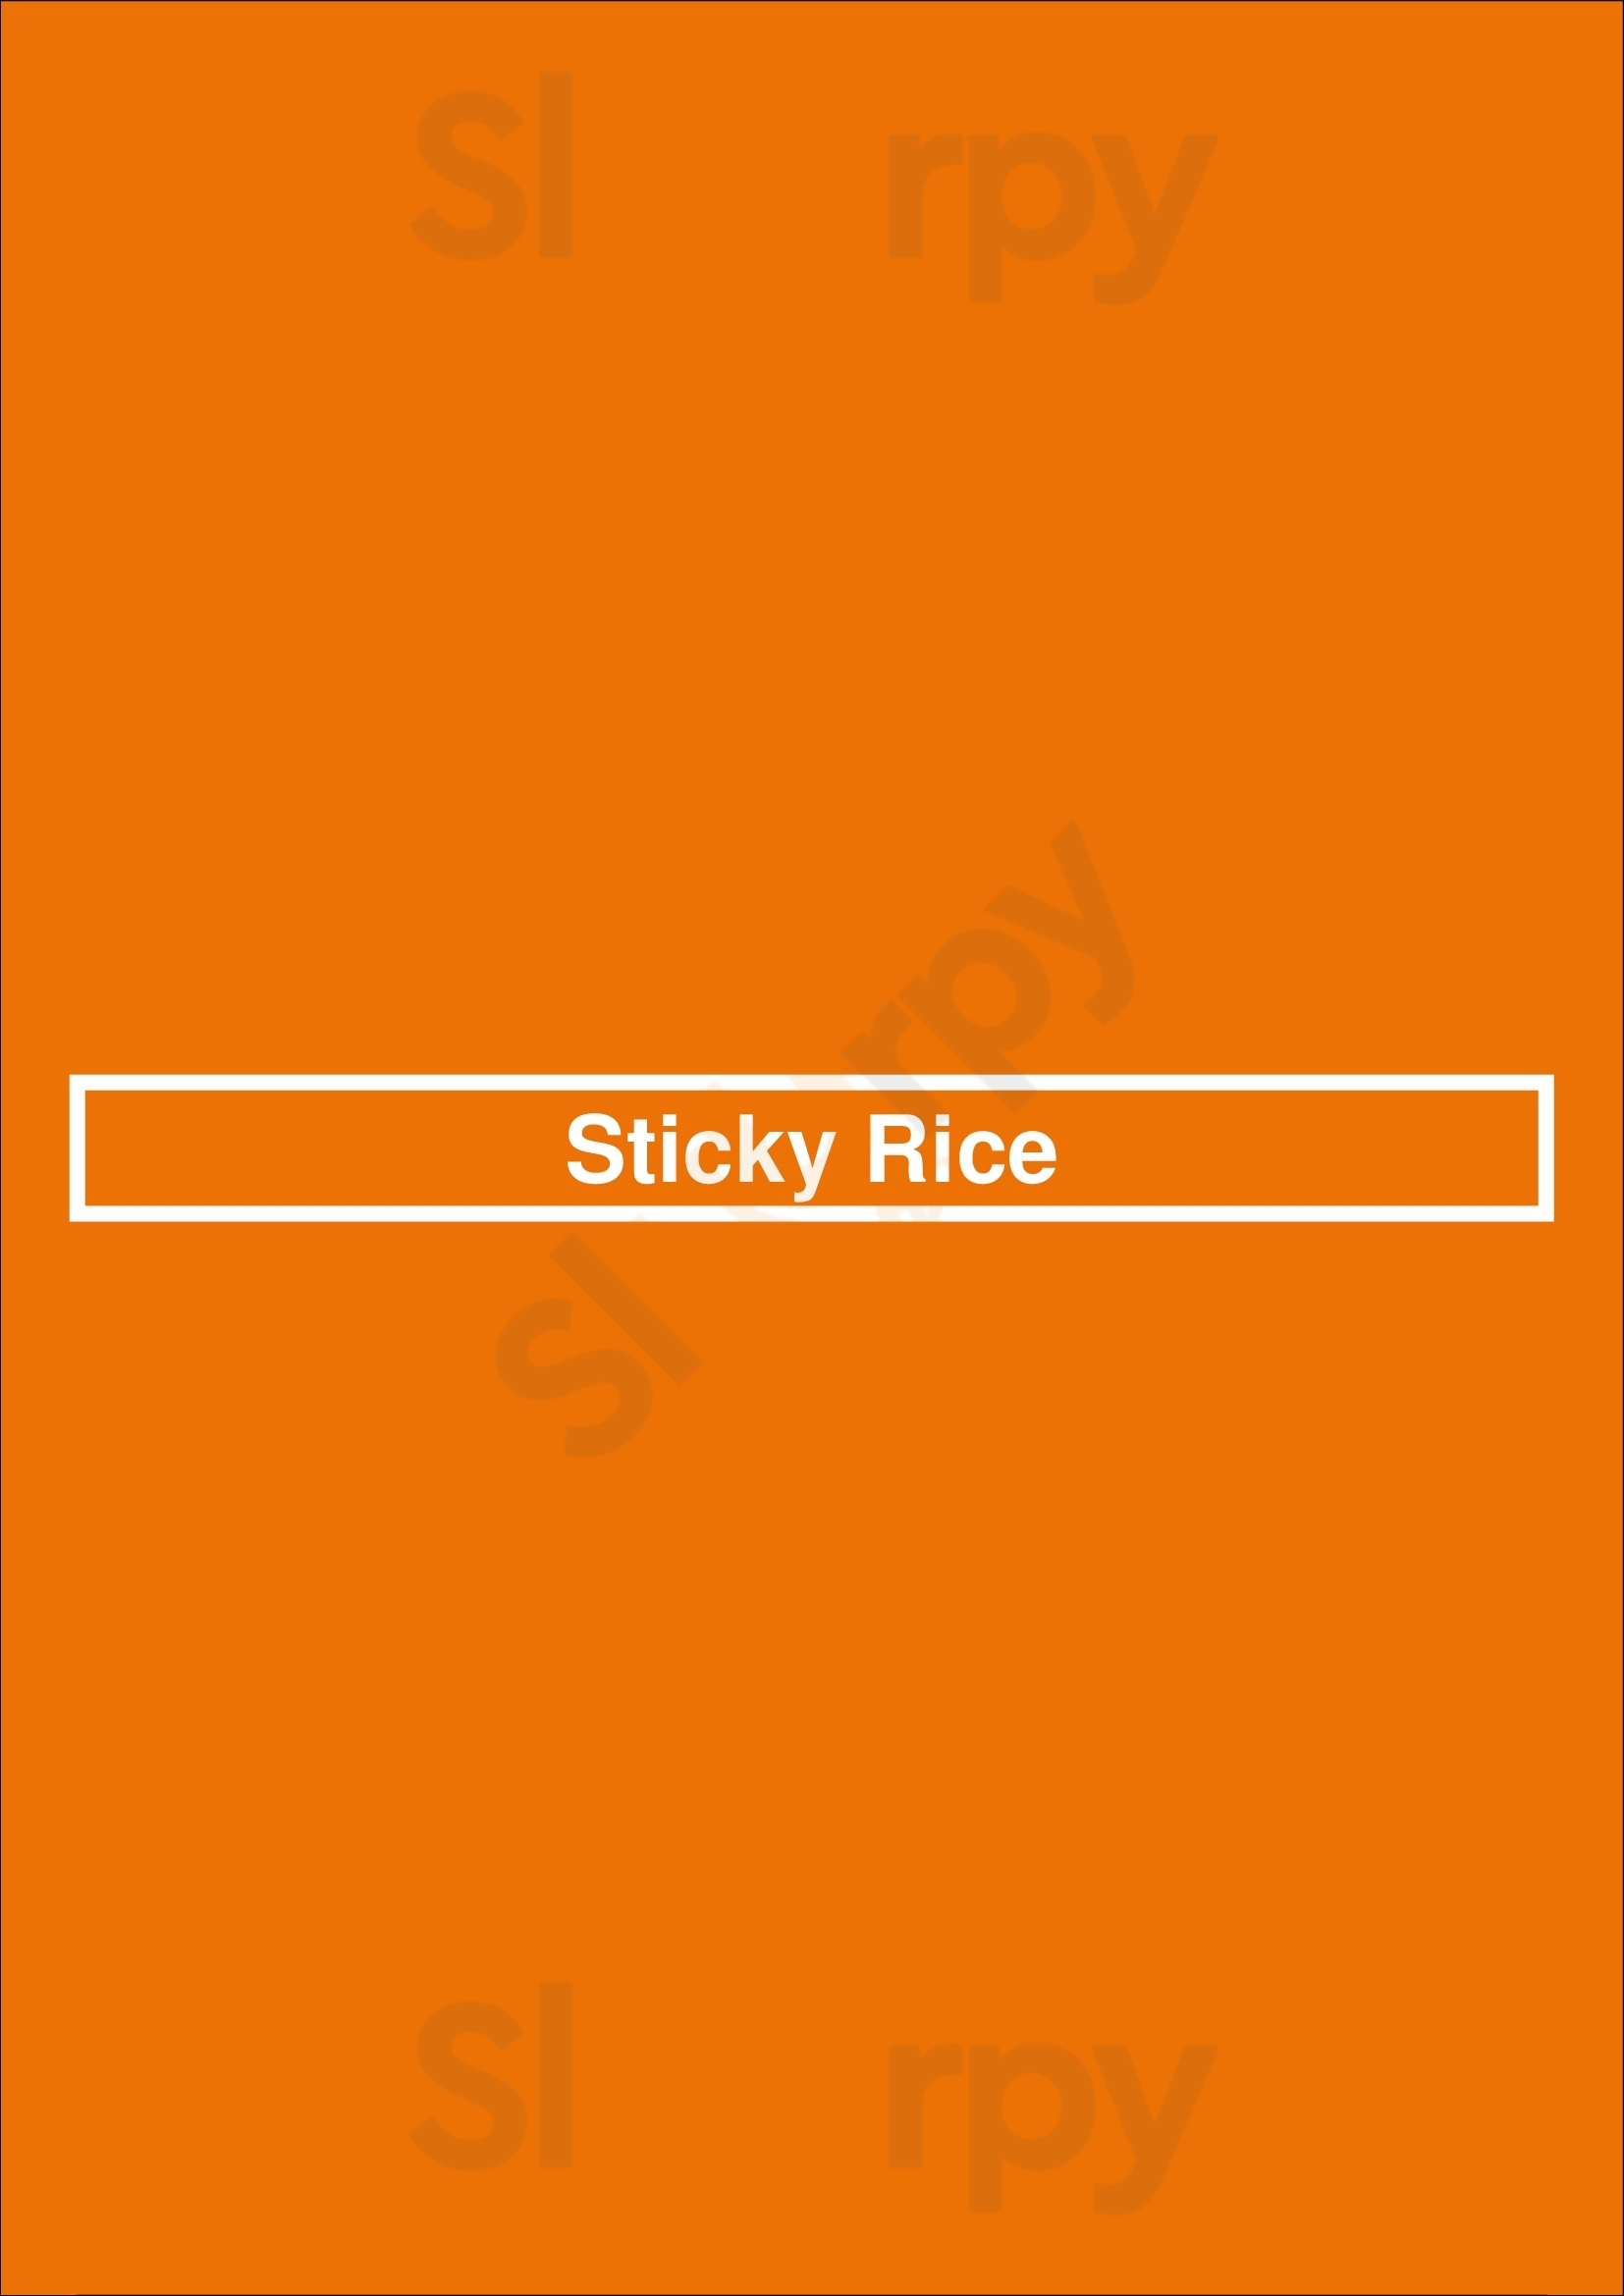 Sticky Rice Washington DC Menu - 1